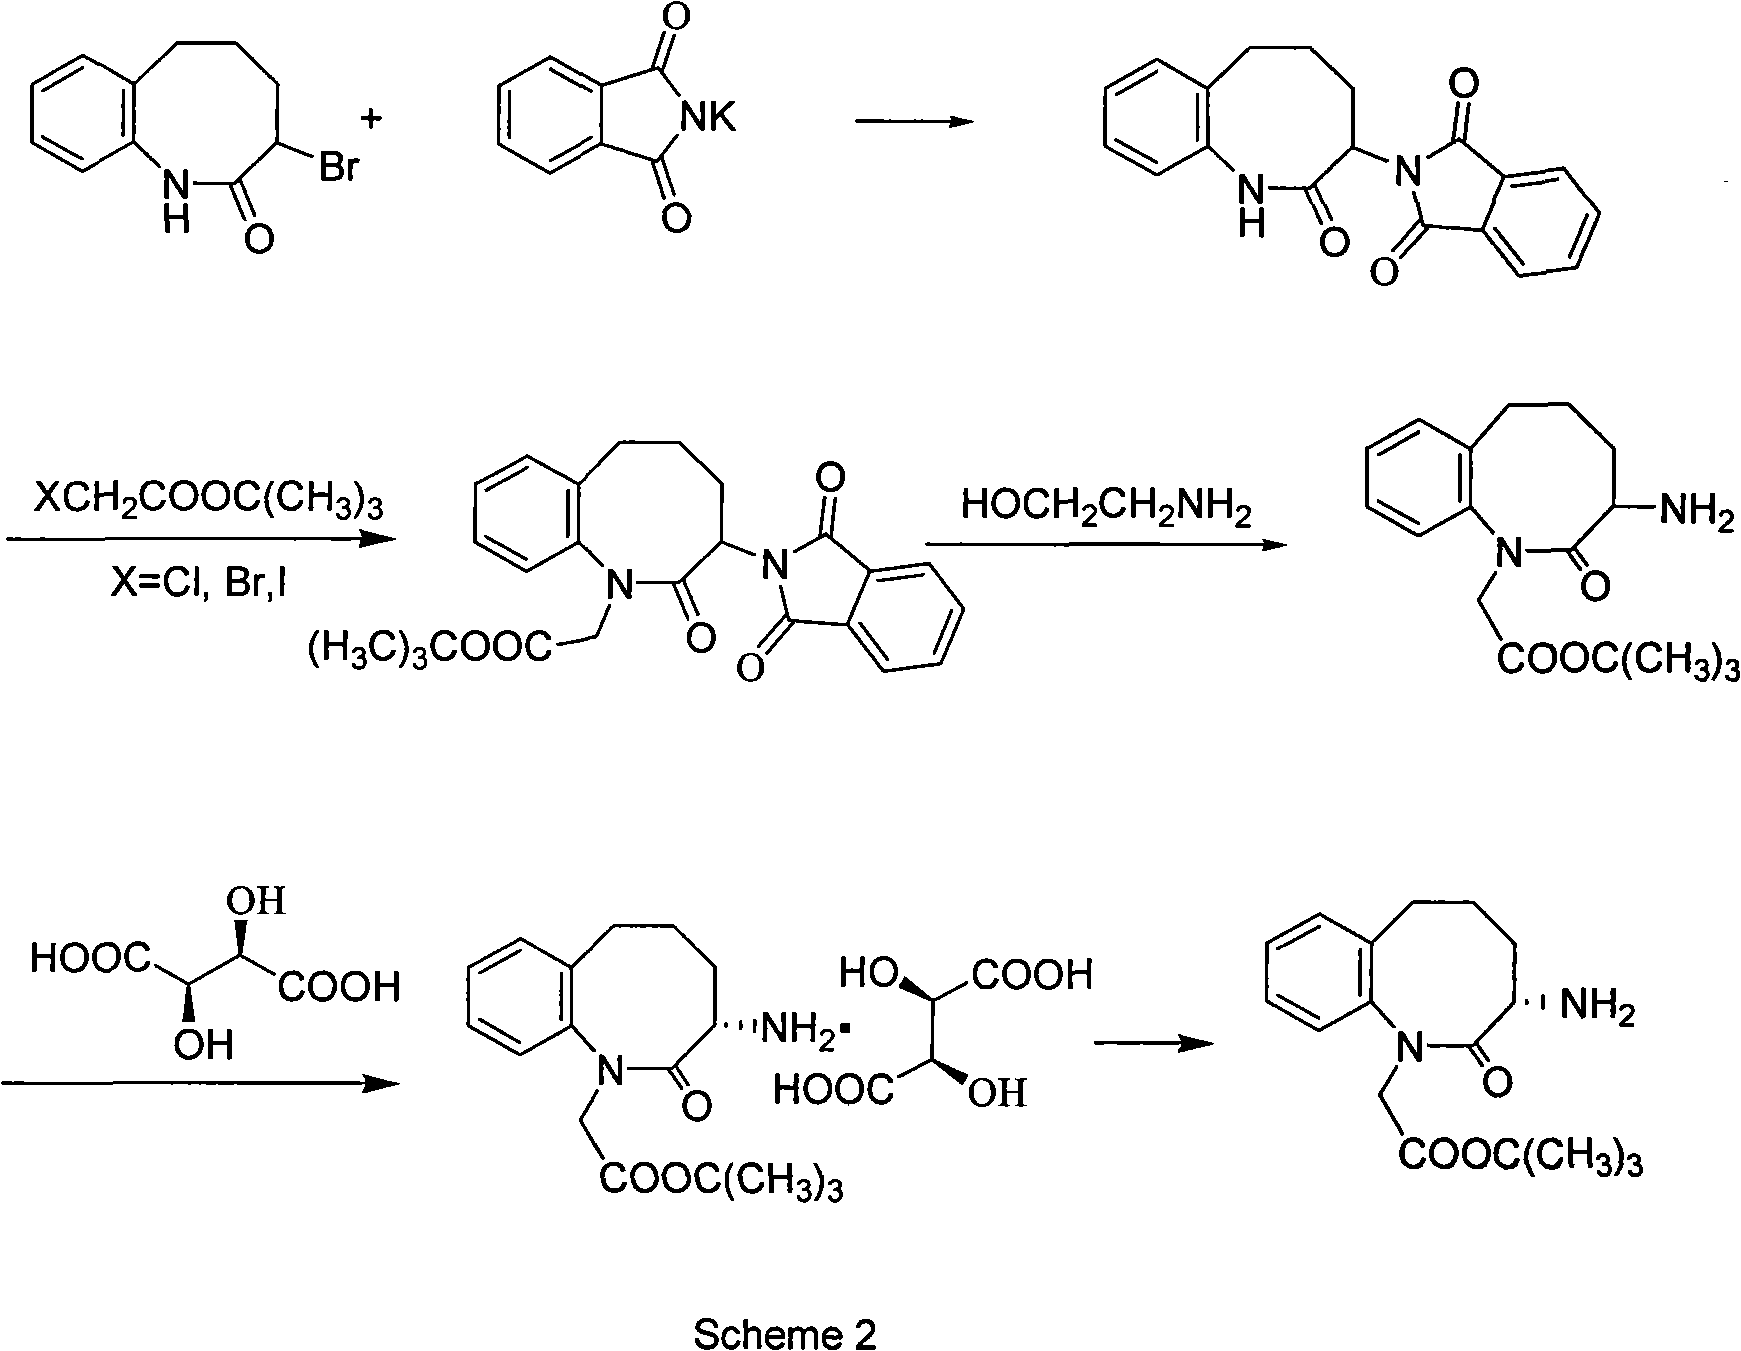 Method for preparing 3-(S)- amino-2,3,4,5-tetrahydro-2-oxy-1H-1-benzazepin-1-tert-butyl acetate